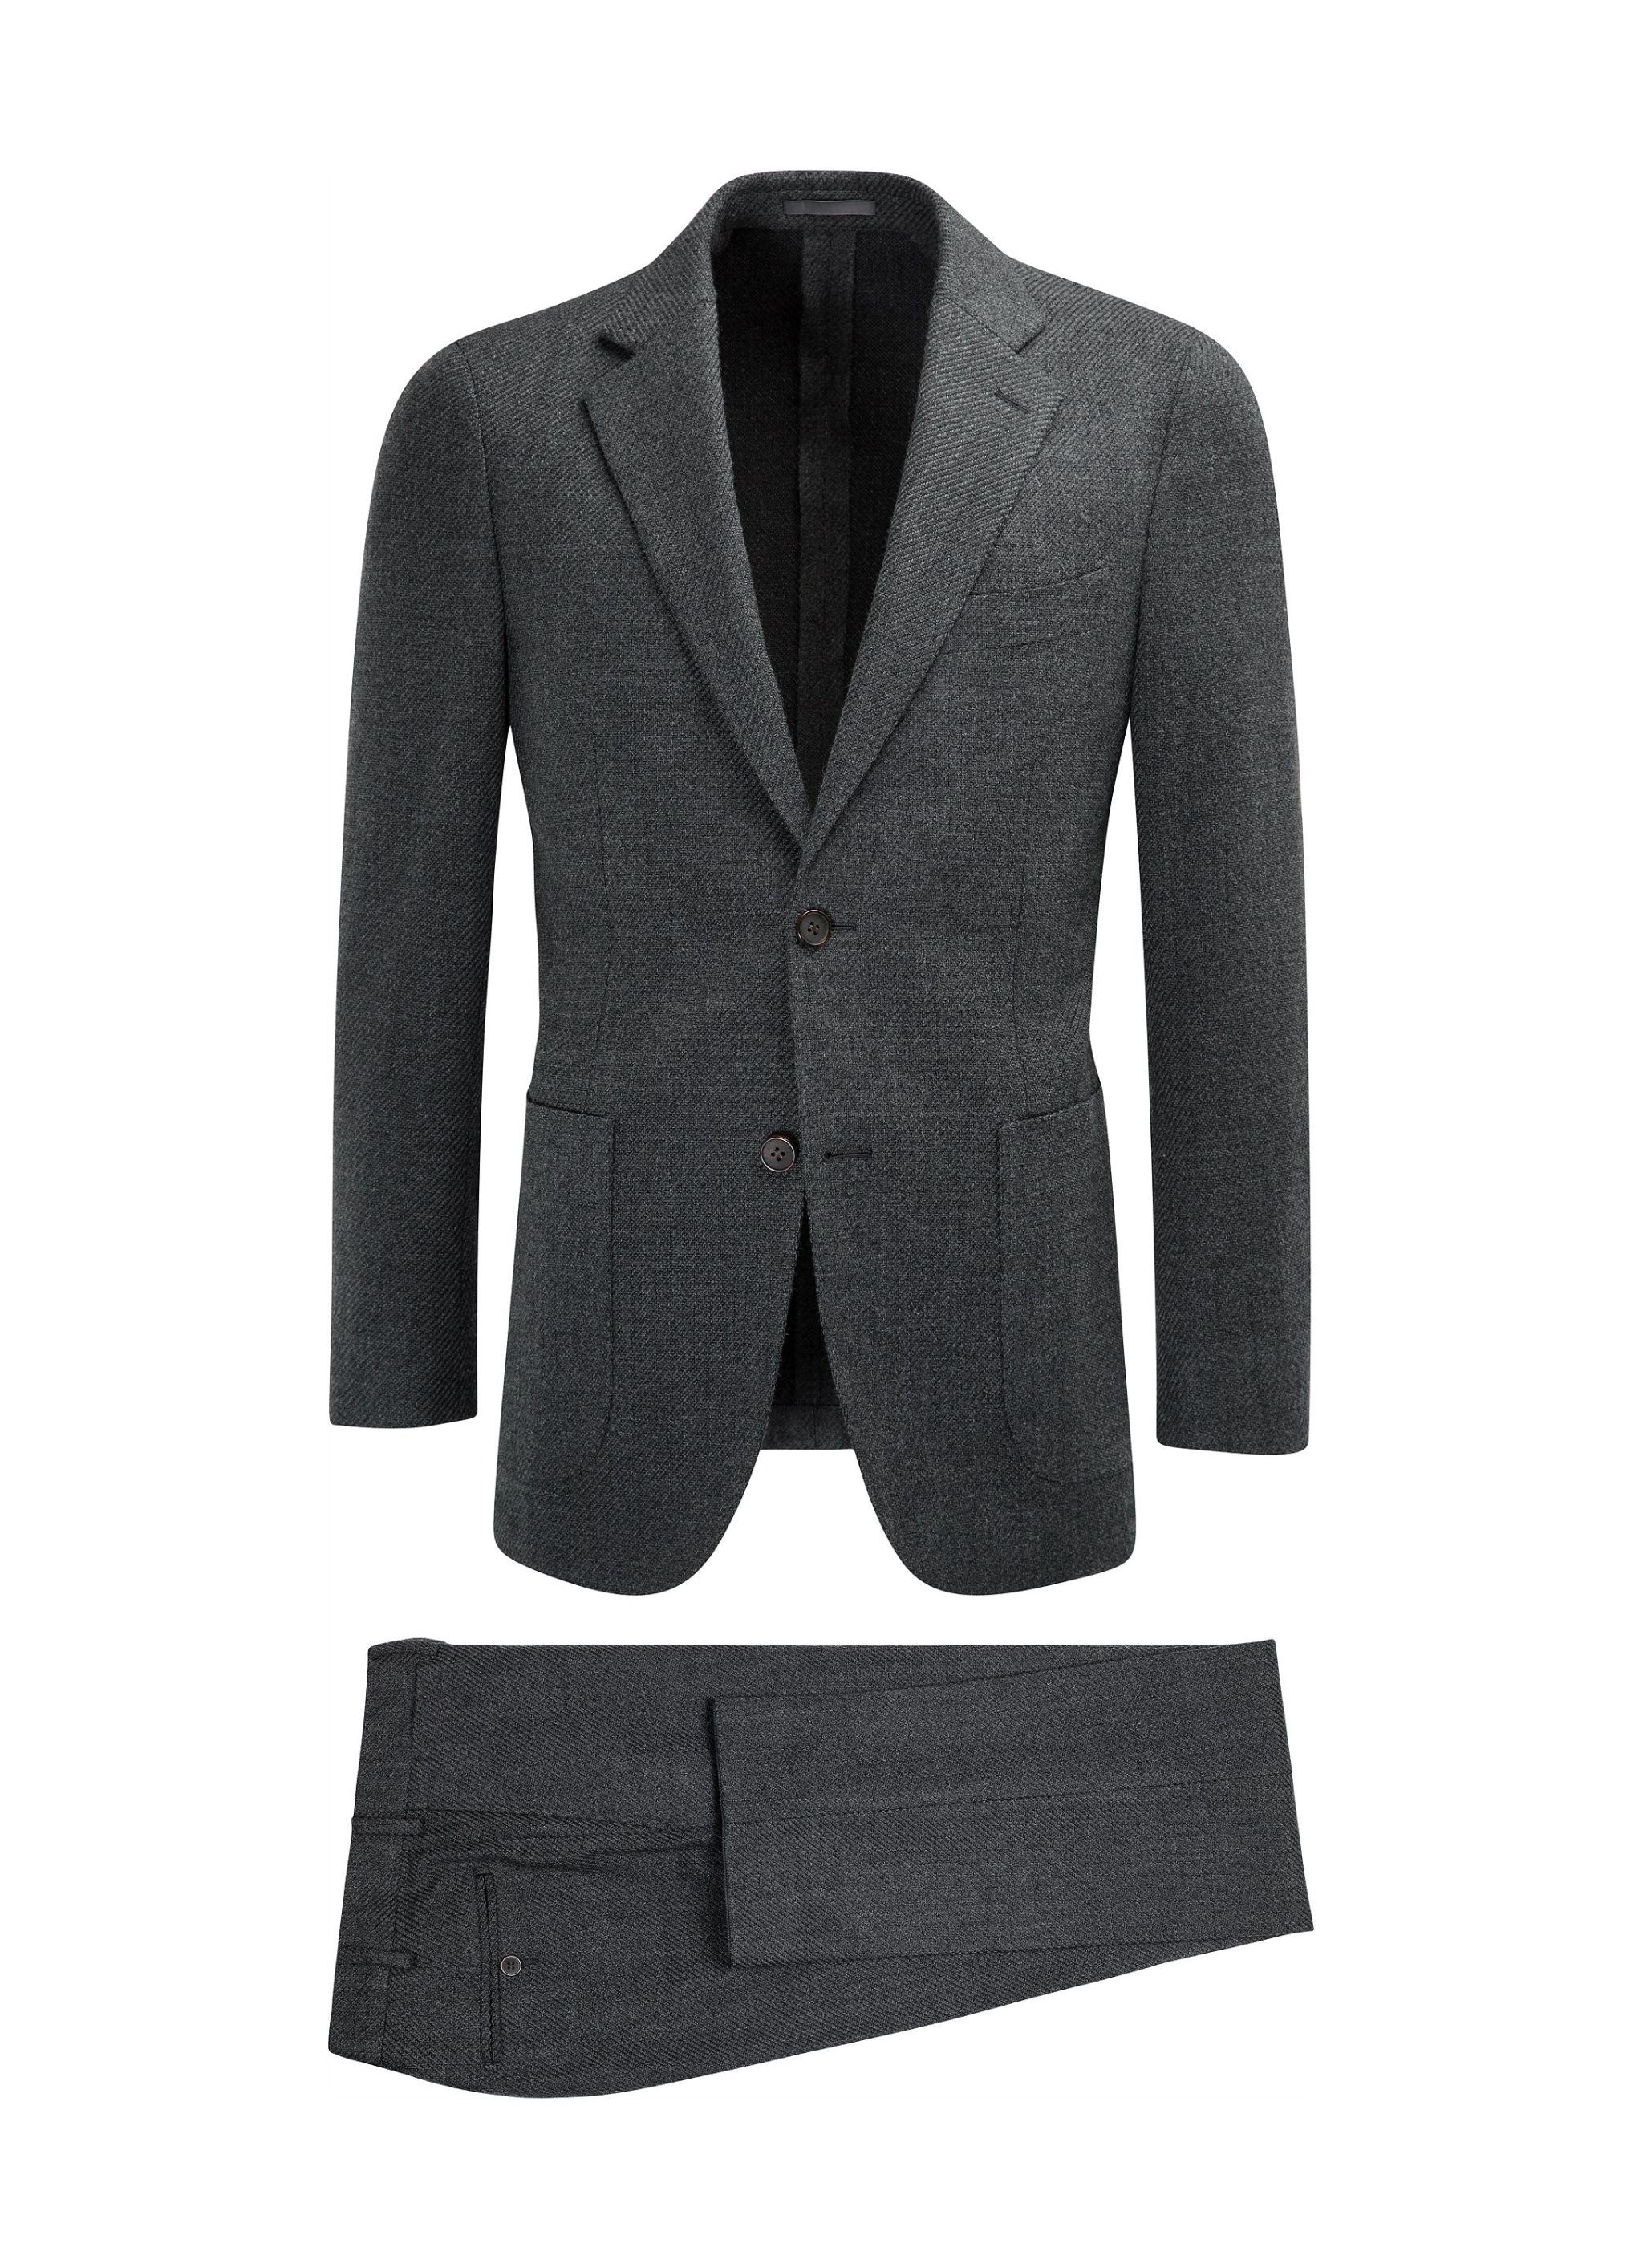 Office wardrobe basics - Suitsupply FW16 – Dress Like A